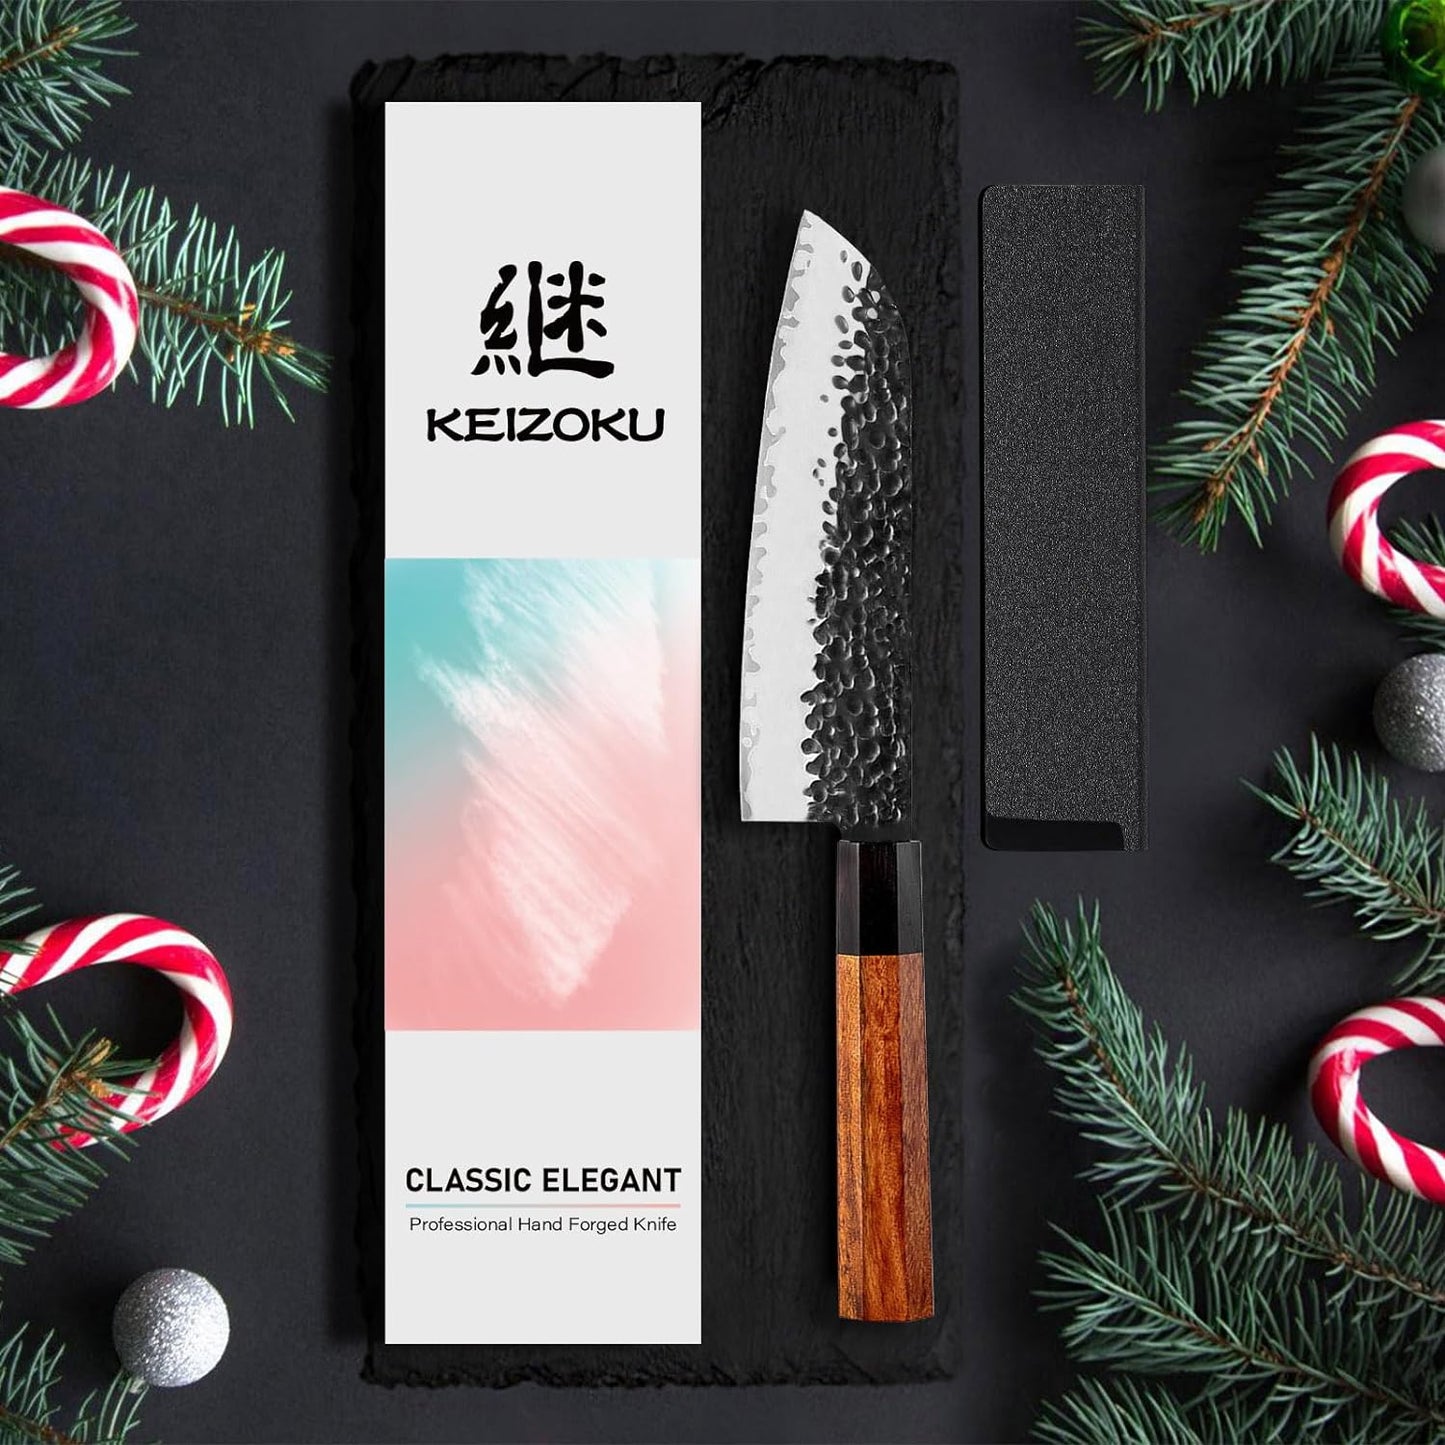 KD Japanese Santoku Chef Knife High Carbon Steel with Sheath & Gift Box